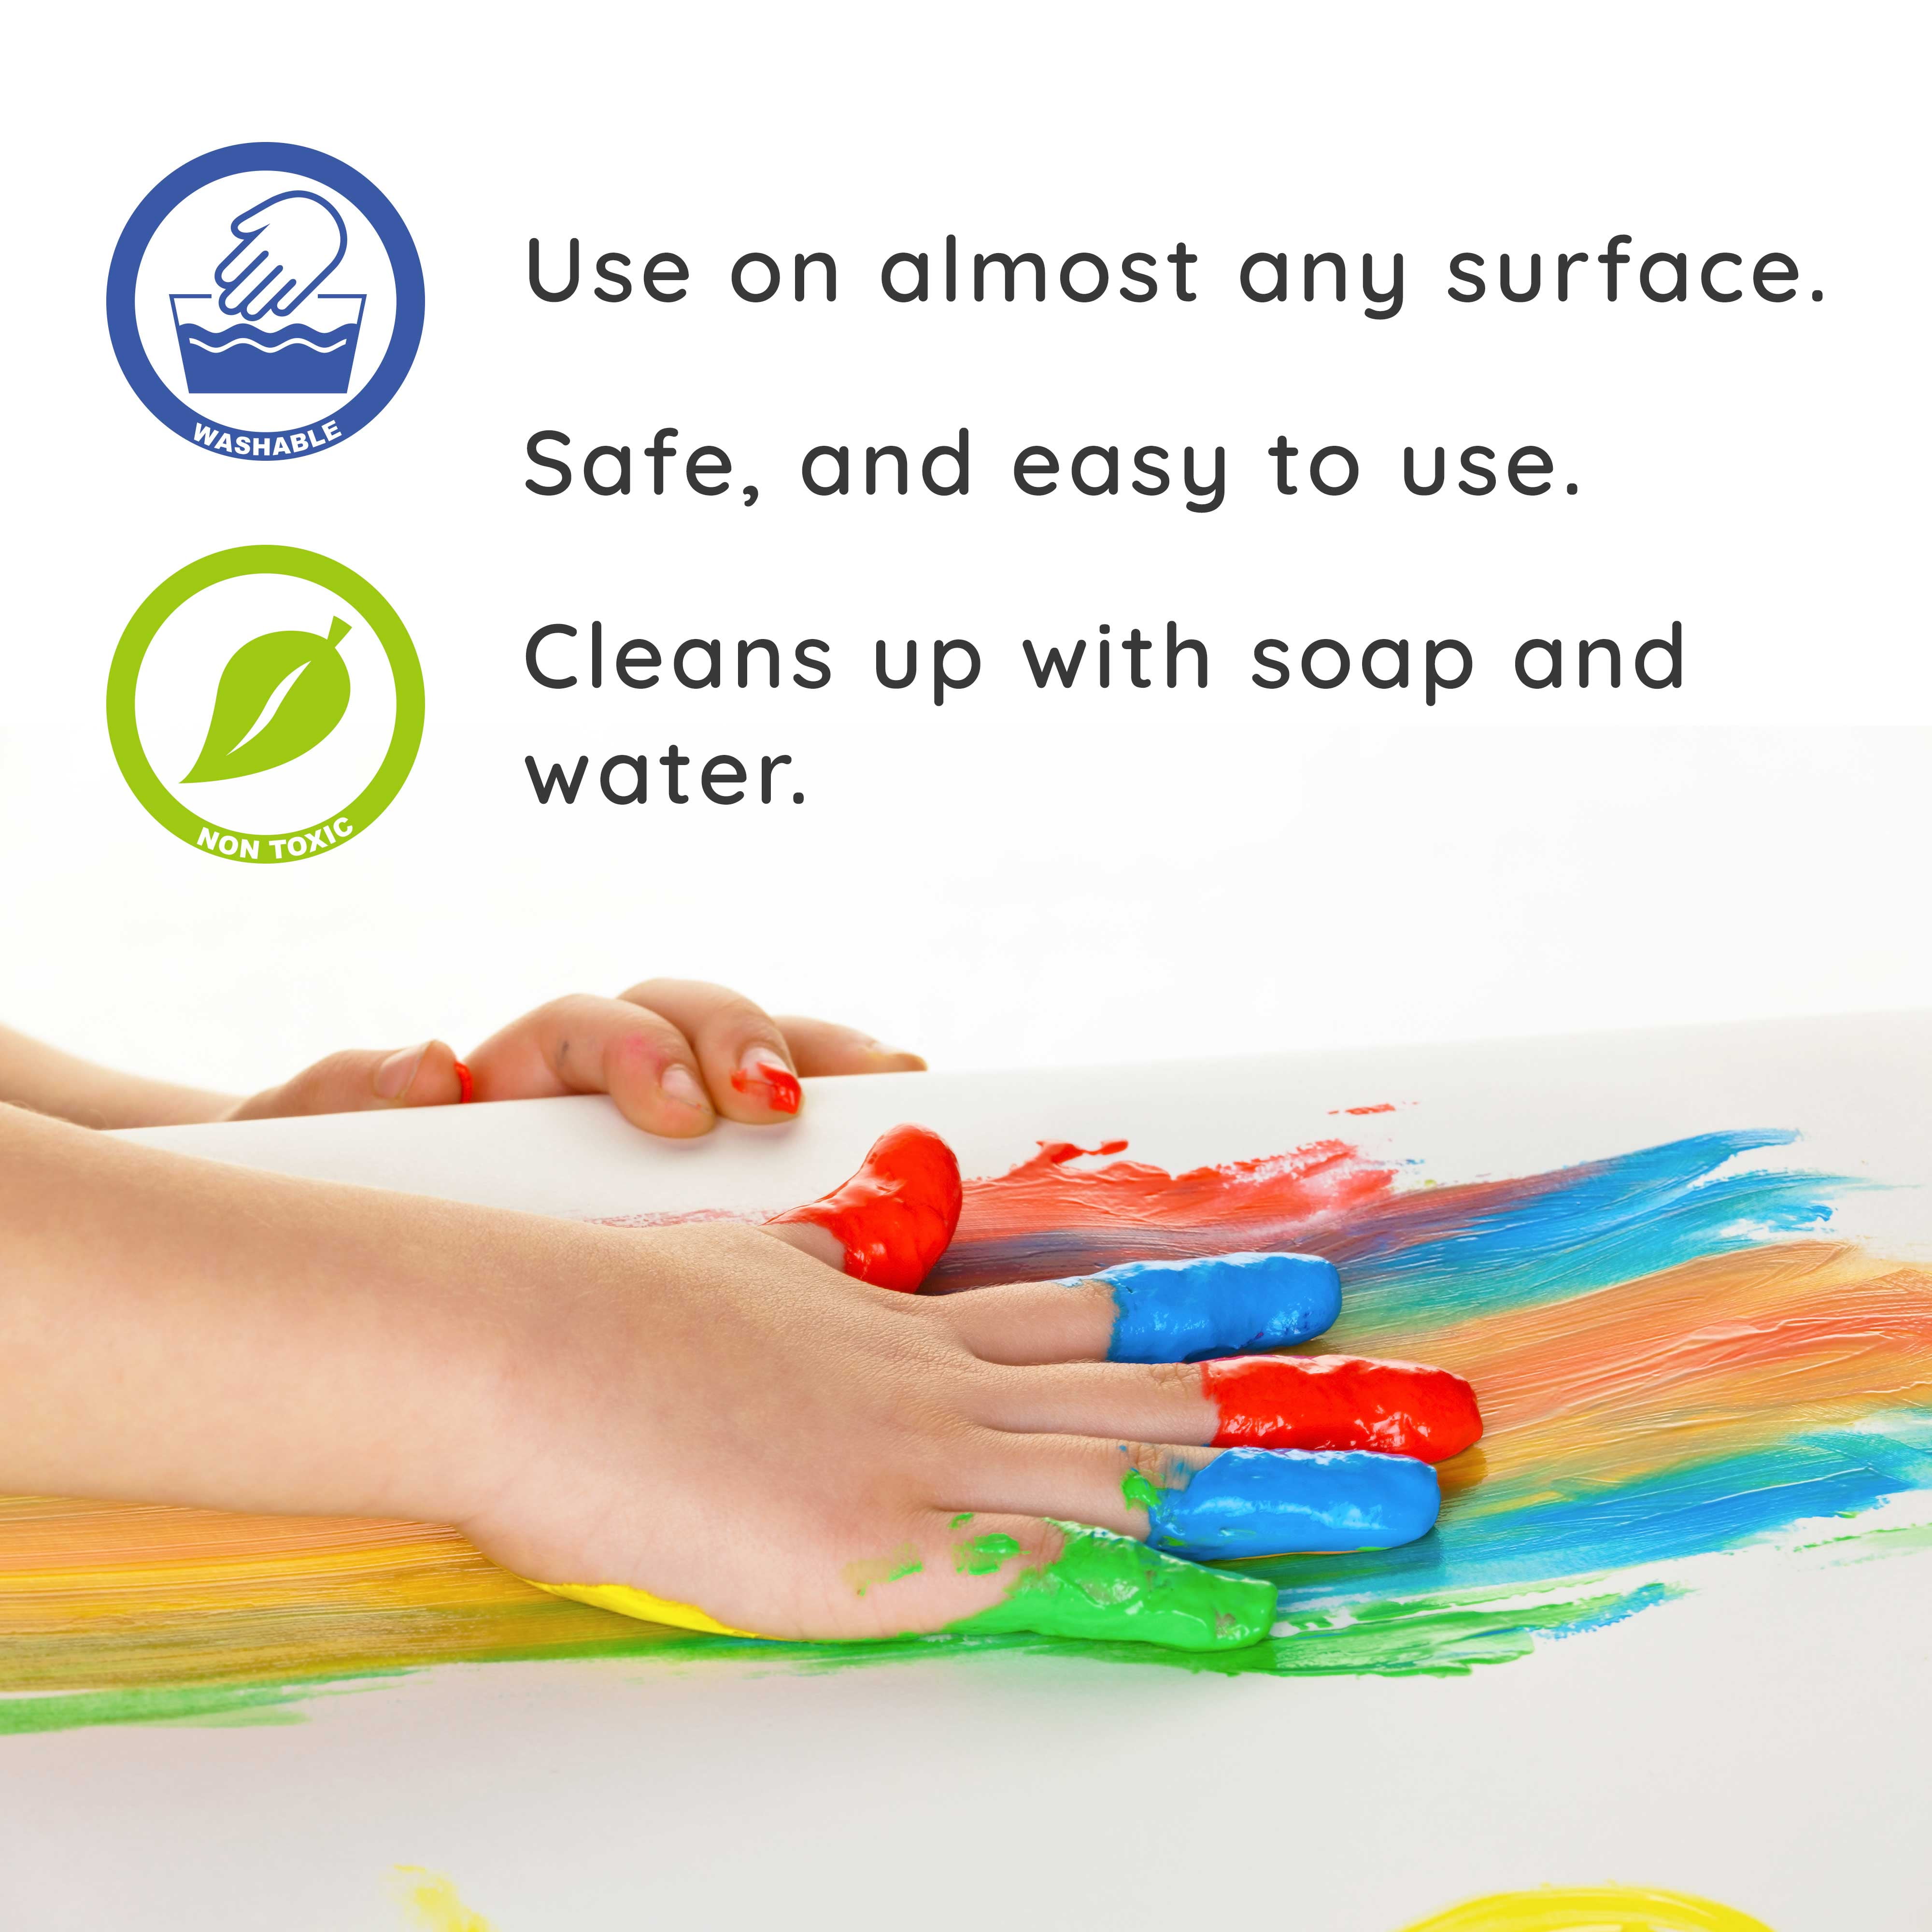 Washable Tempera Paint for Kids,30 Colors (2 oz Each) Liquid Poster Pa –  HissiCo Art